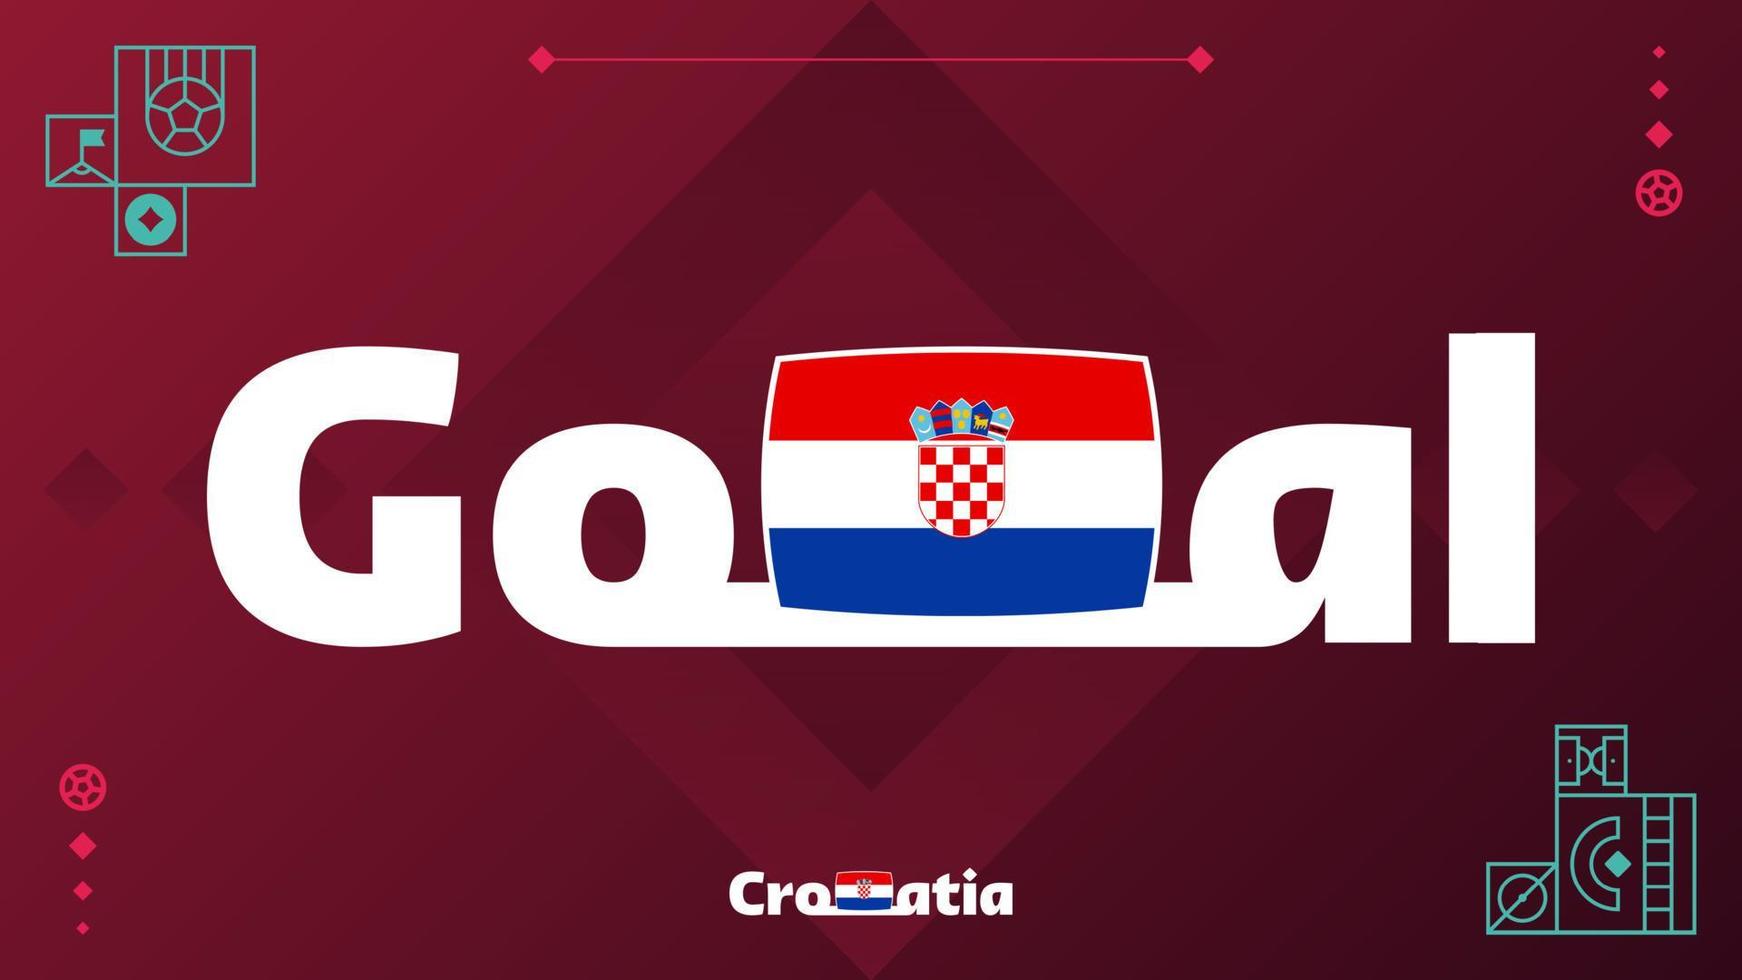 croatia flag with goal slogan on tournament background. World football 2022 Vector illustration